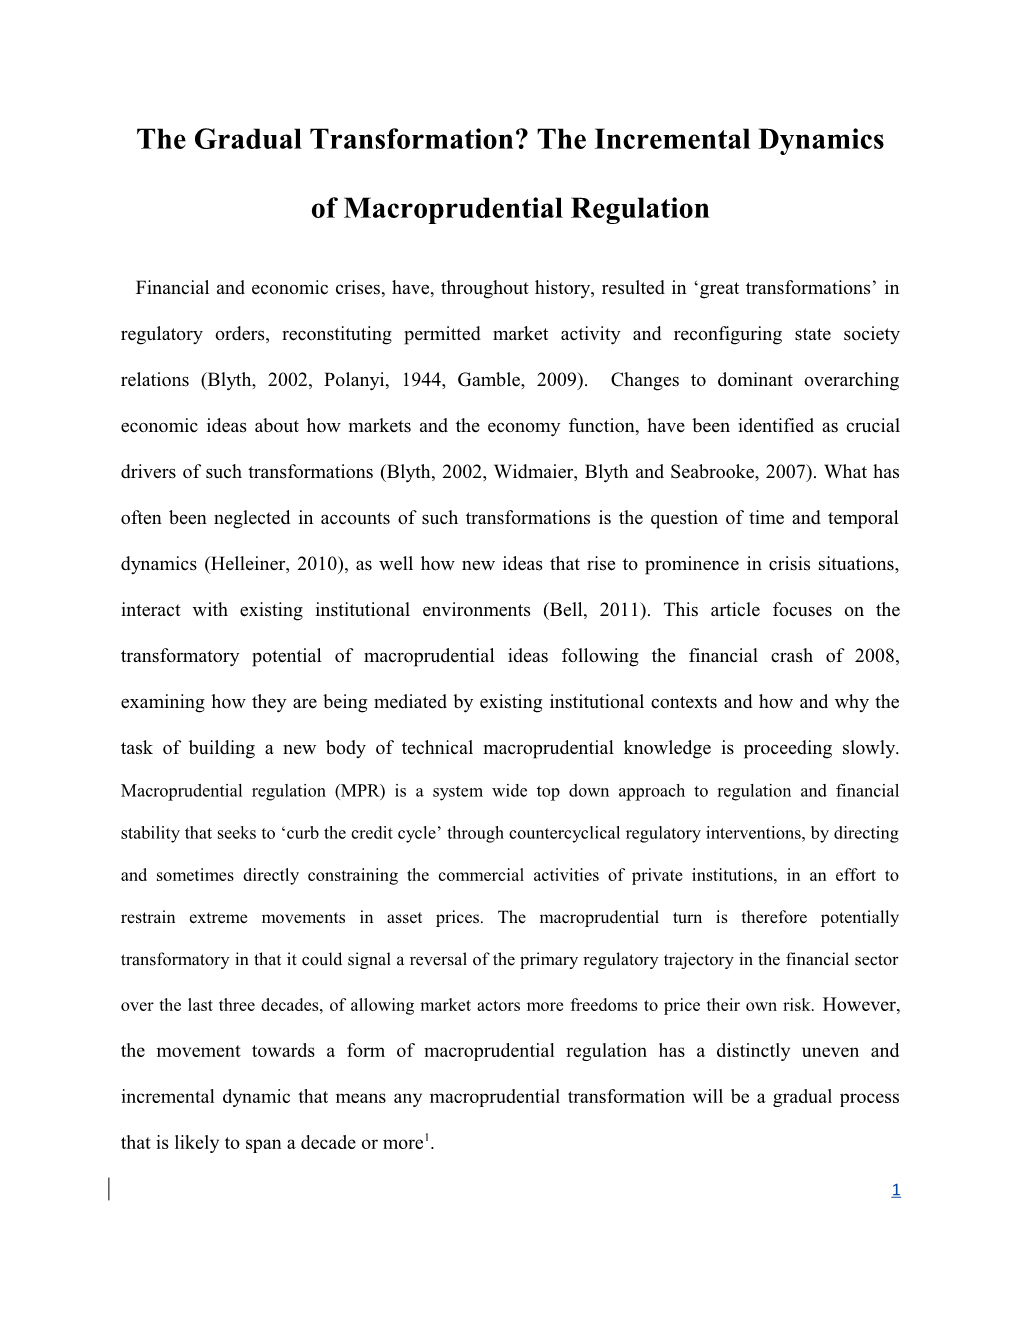 The Gradual Transformation?The Incremental Dynamics of Macroprudential Regulation